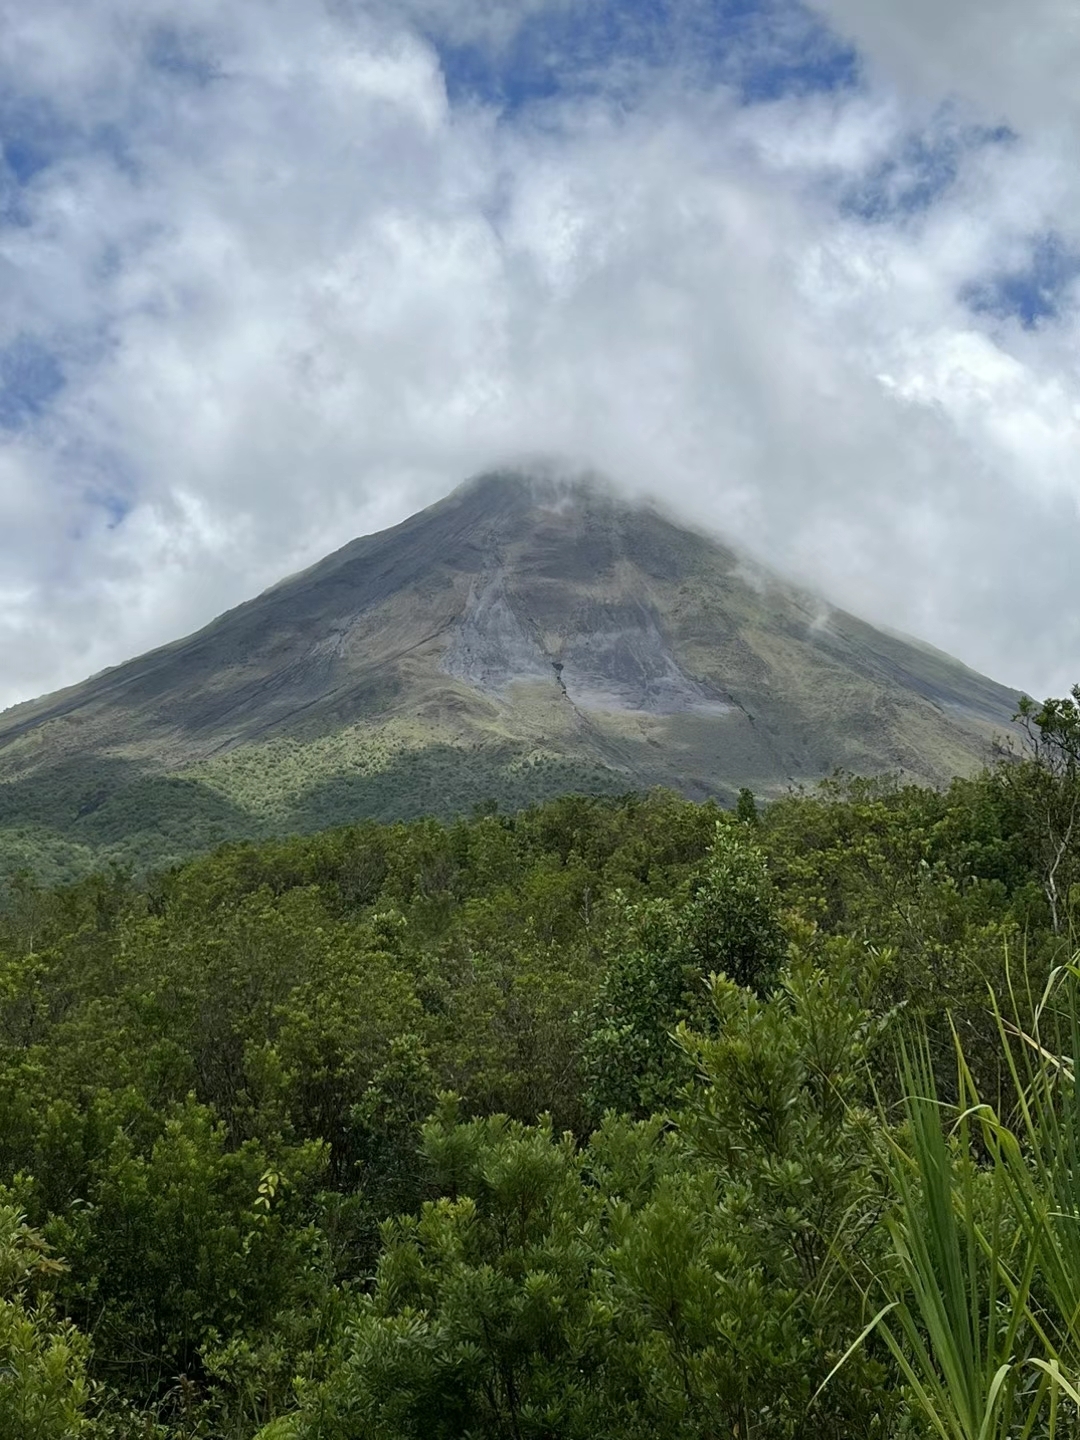 ARENAL VOLCAN是哥斯达黎加最漂亮的火山，最著名的景点，游客众多。 火山顶云雾缭绕，难见真